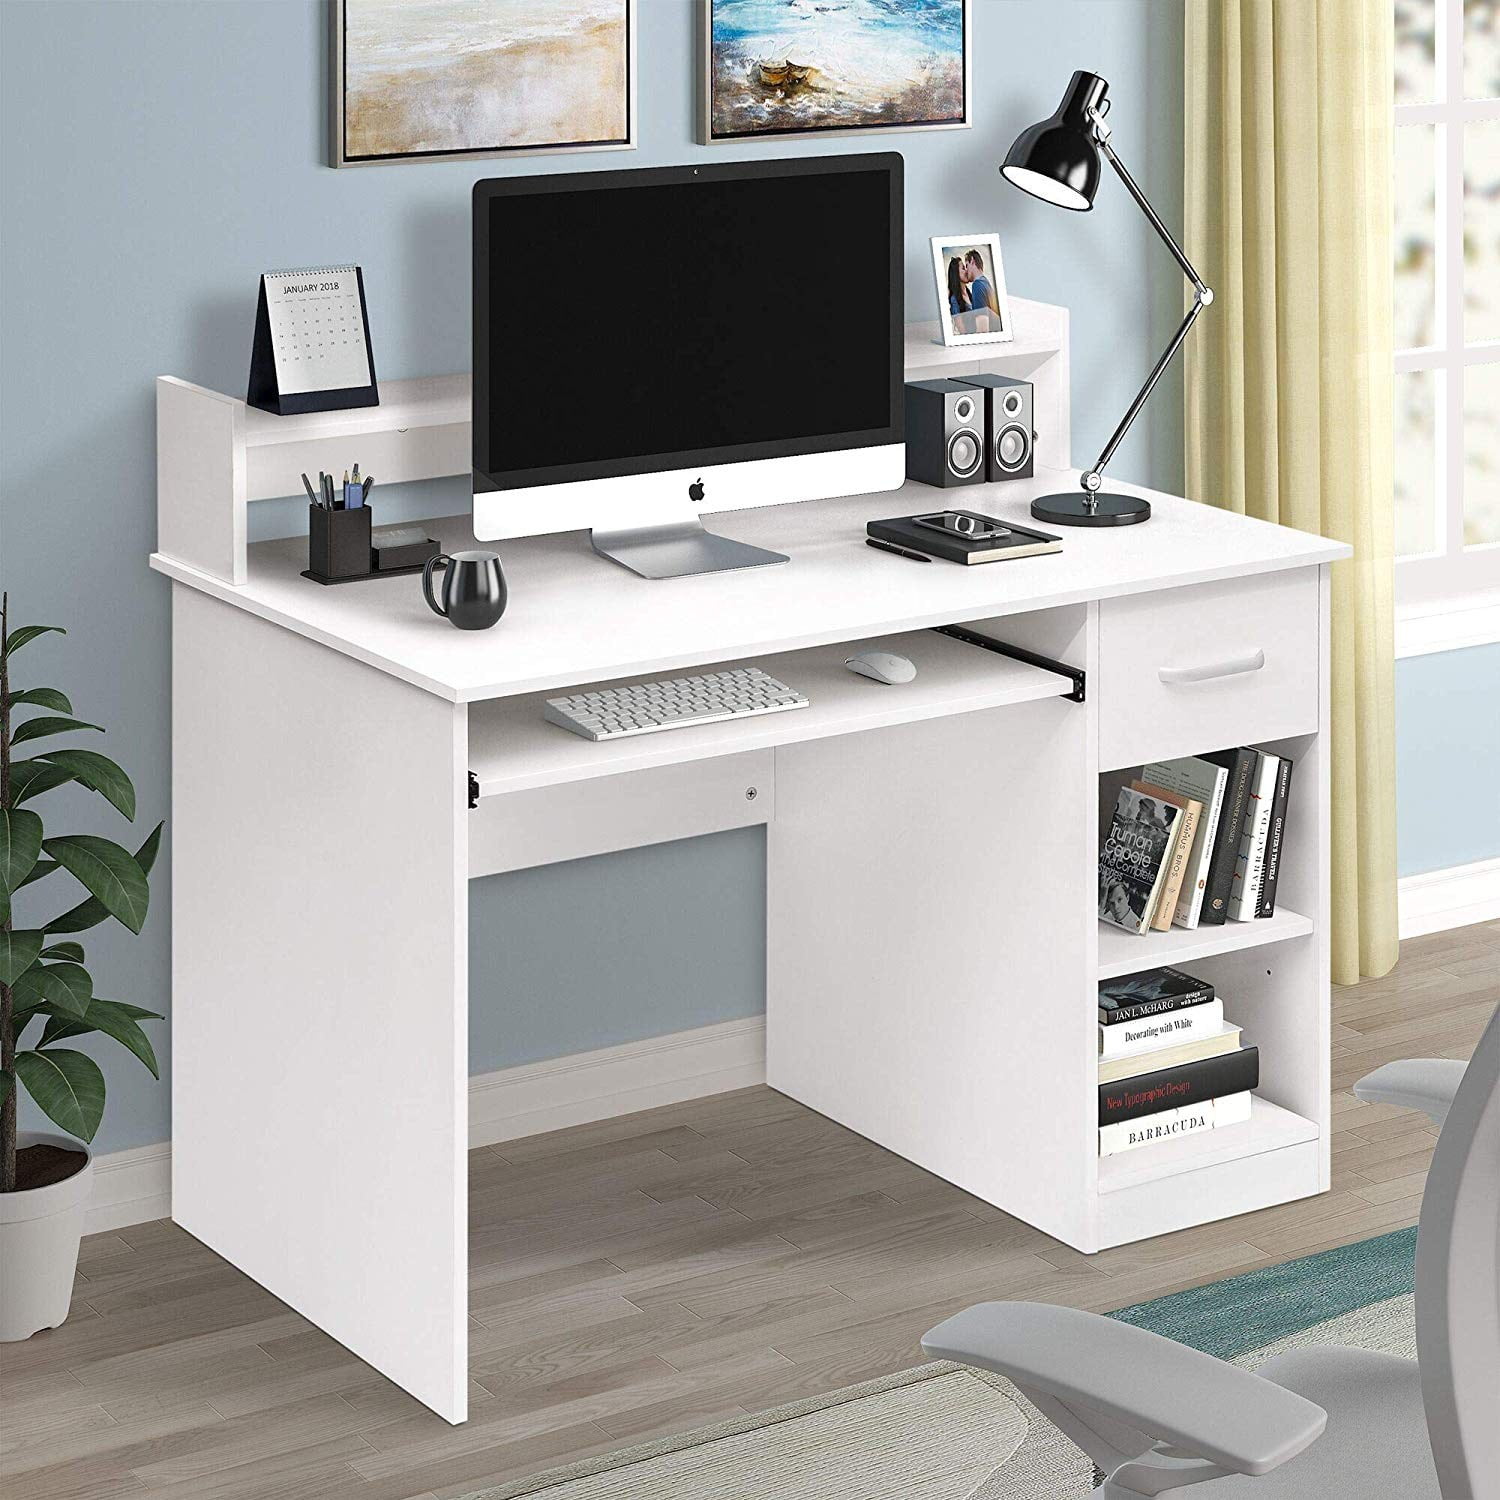 Home Computer Desk Table Workstation Office Laptop PC Desktop Study Shelf Office 